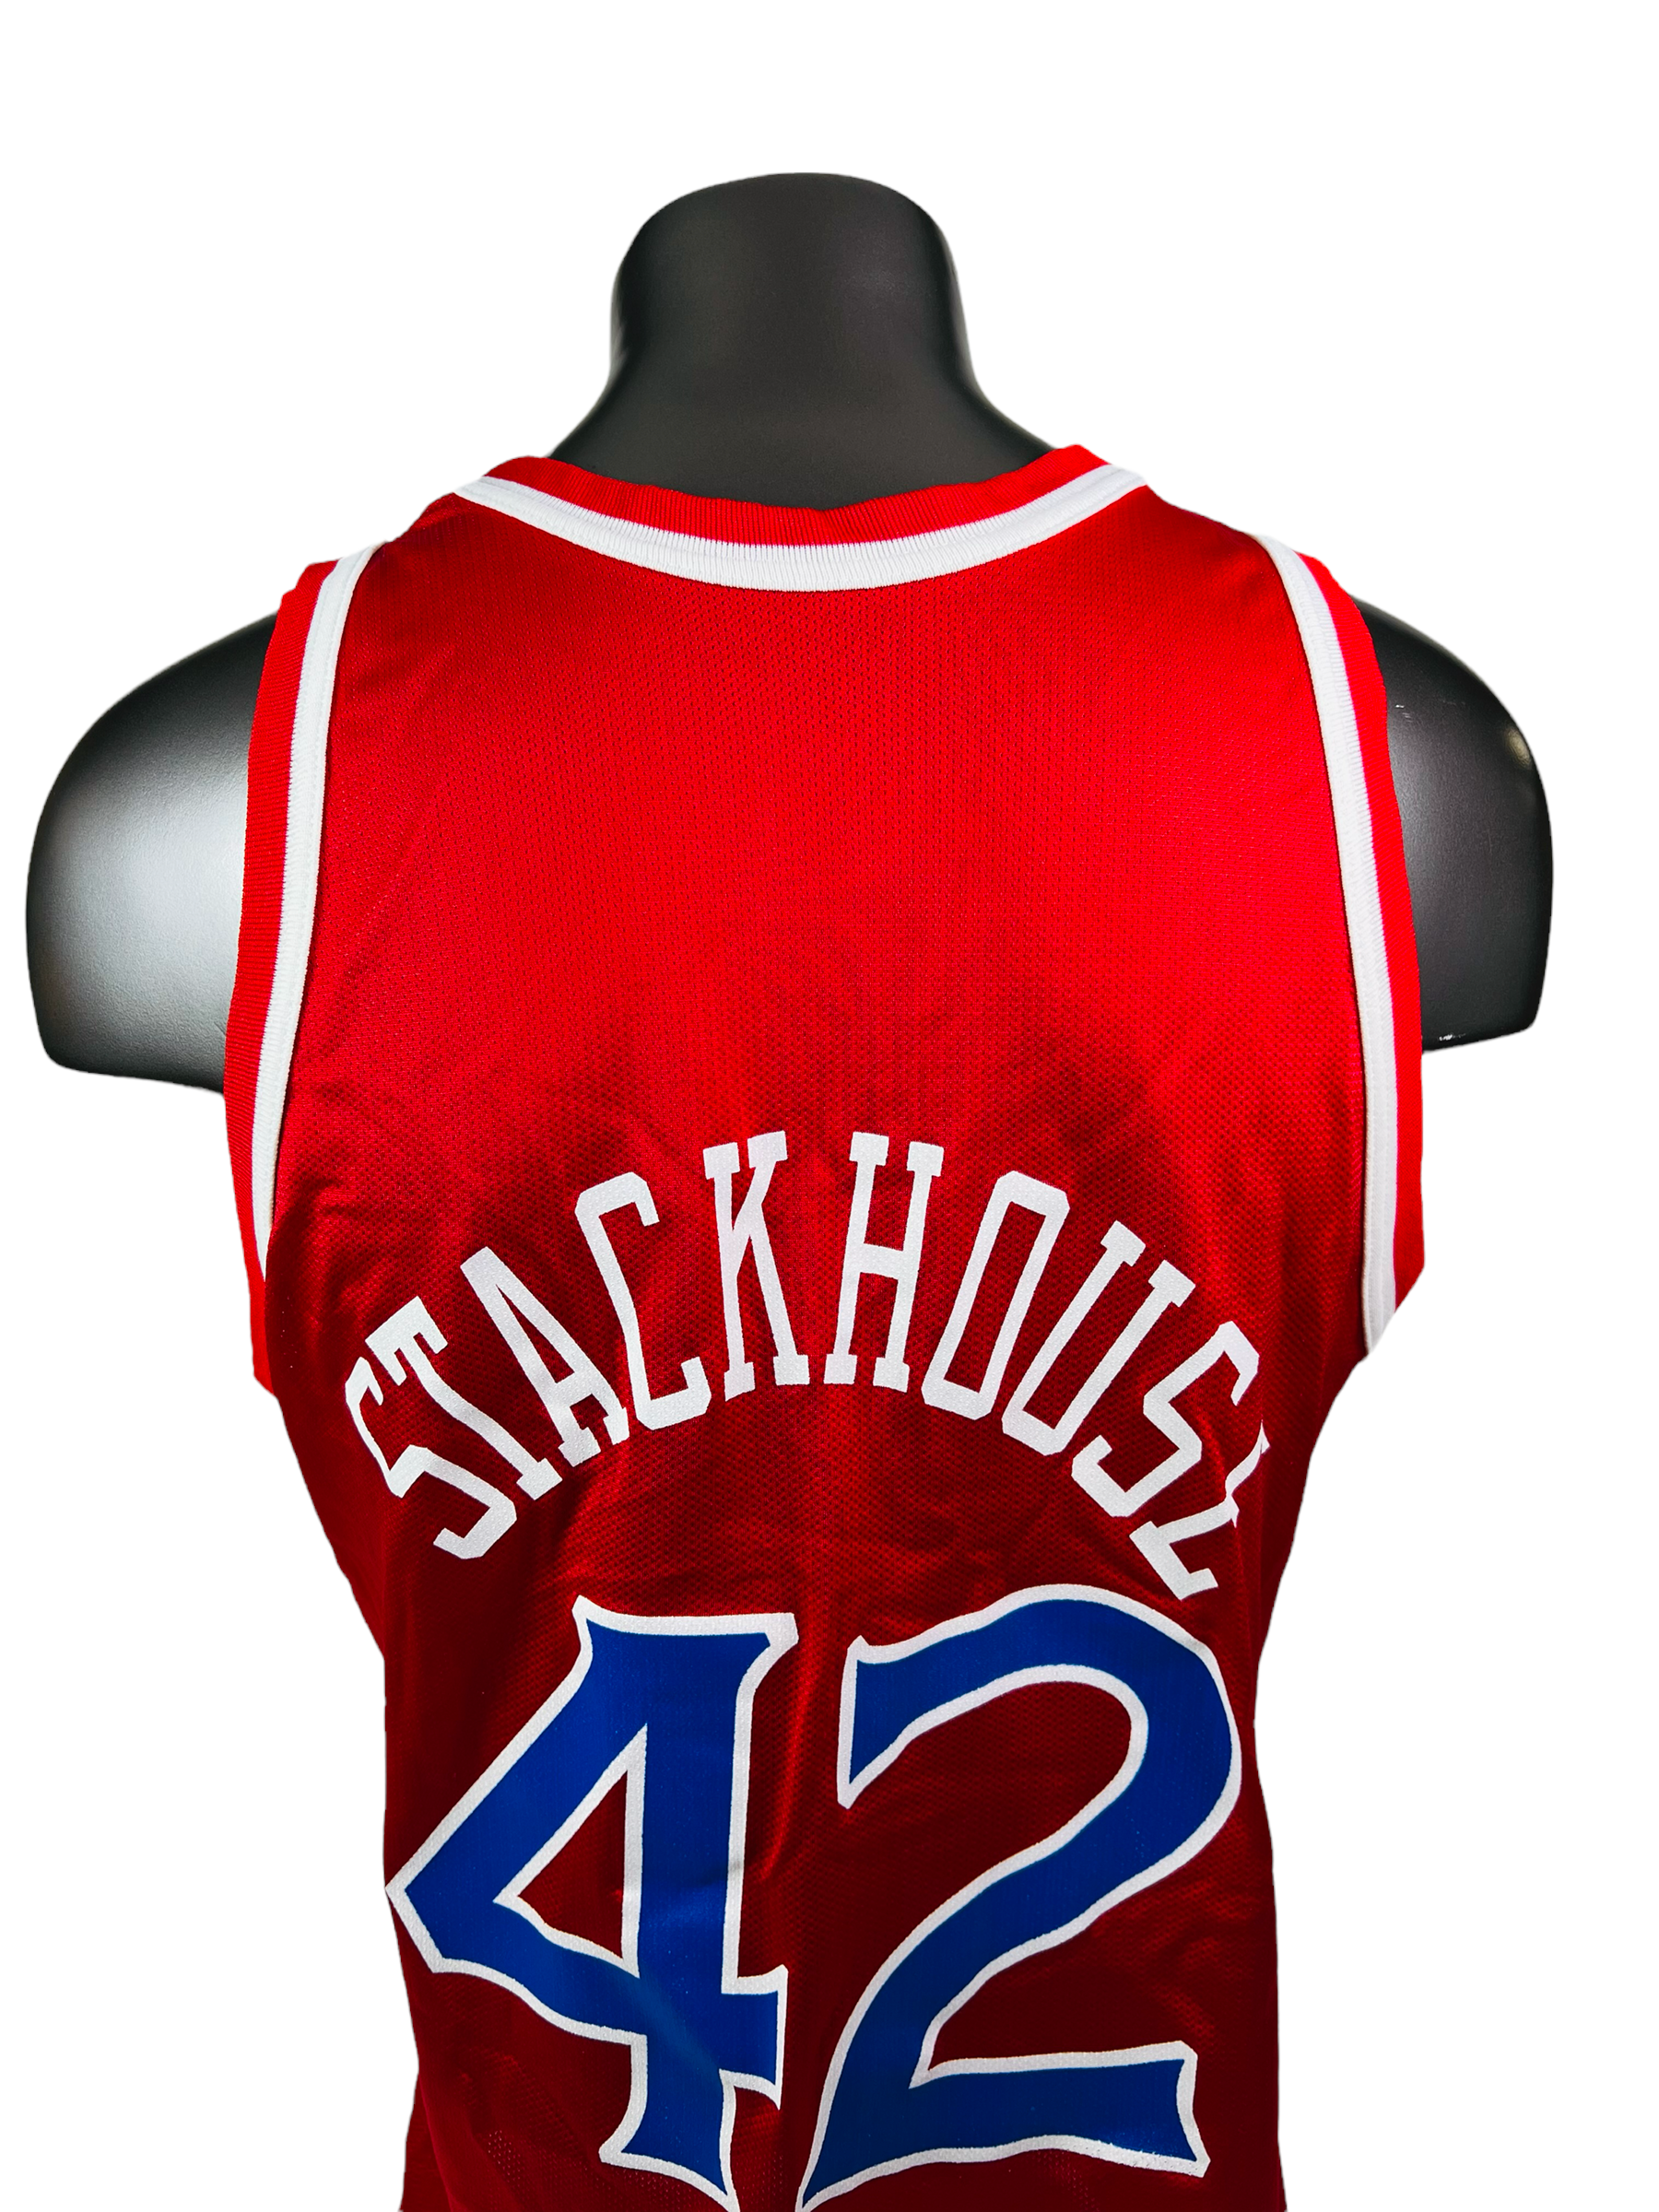 NBA mavs stackhouse ユニフォーム | www.norkhil.com